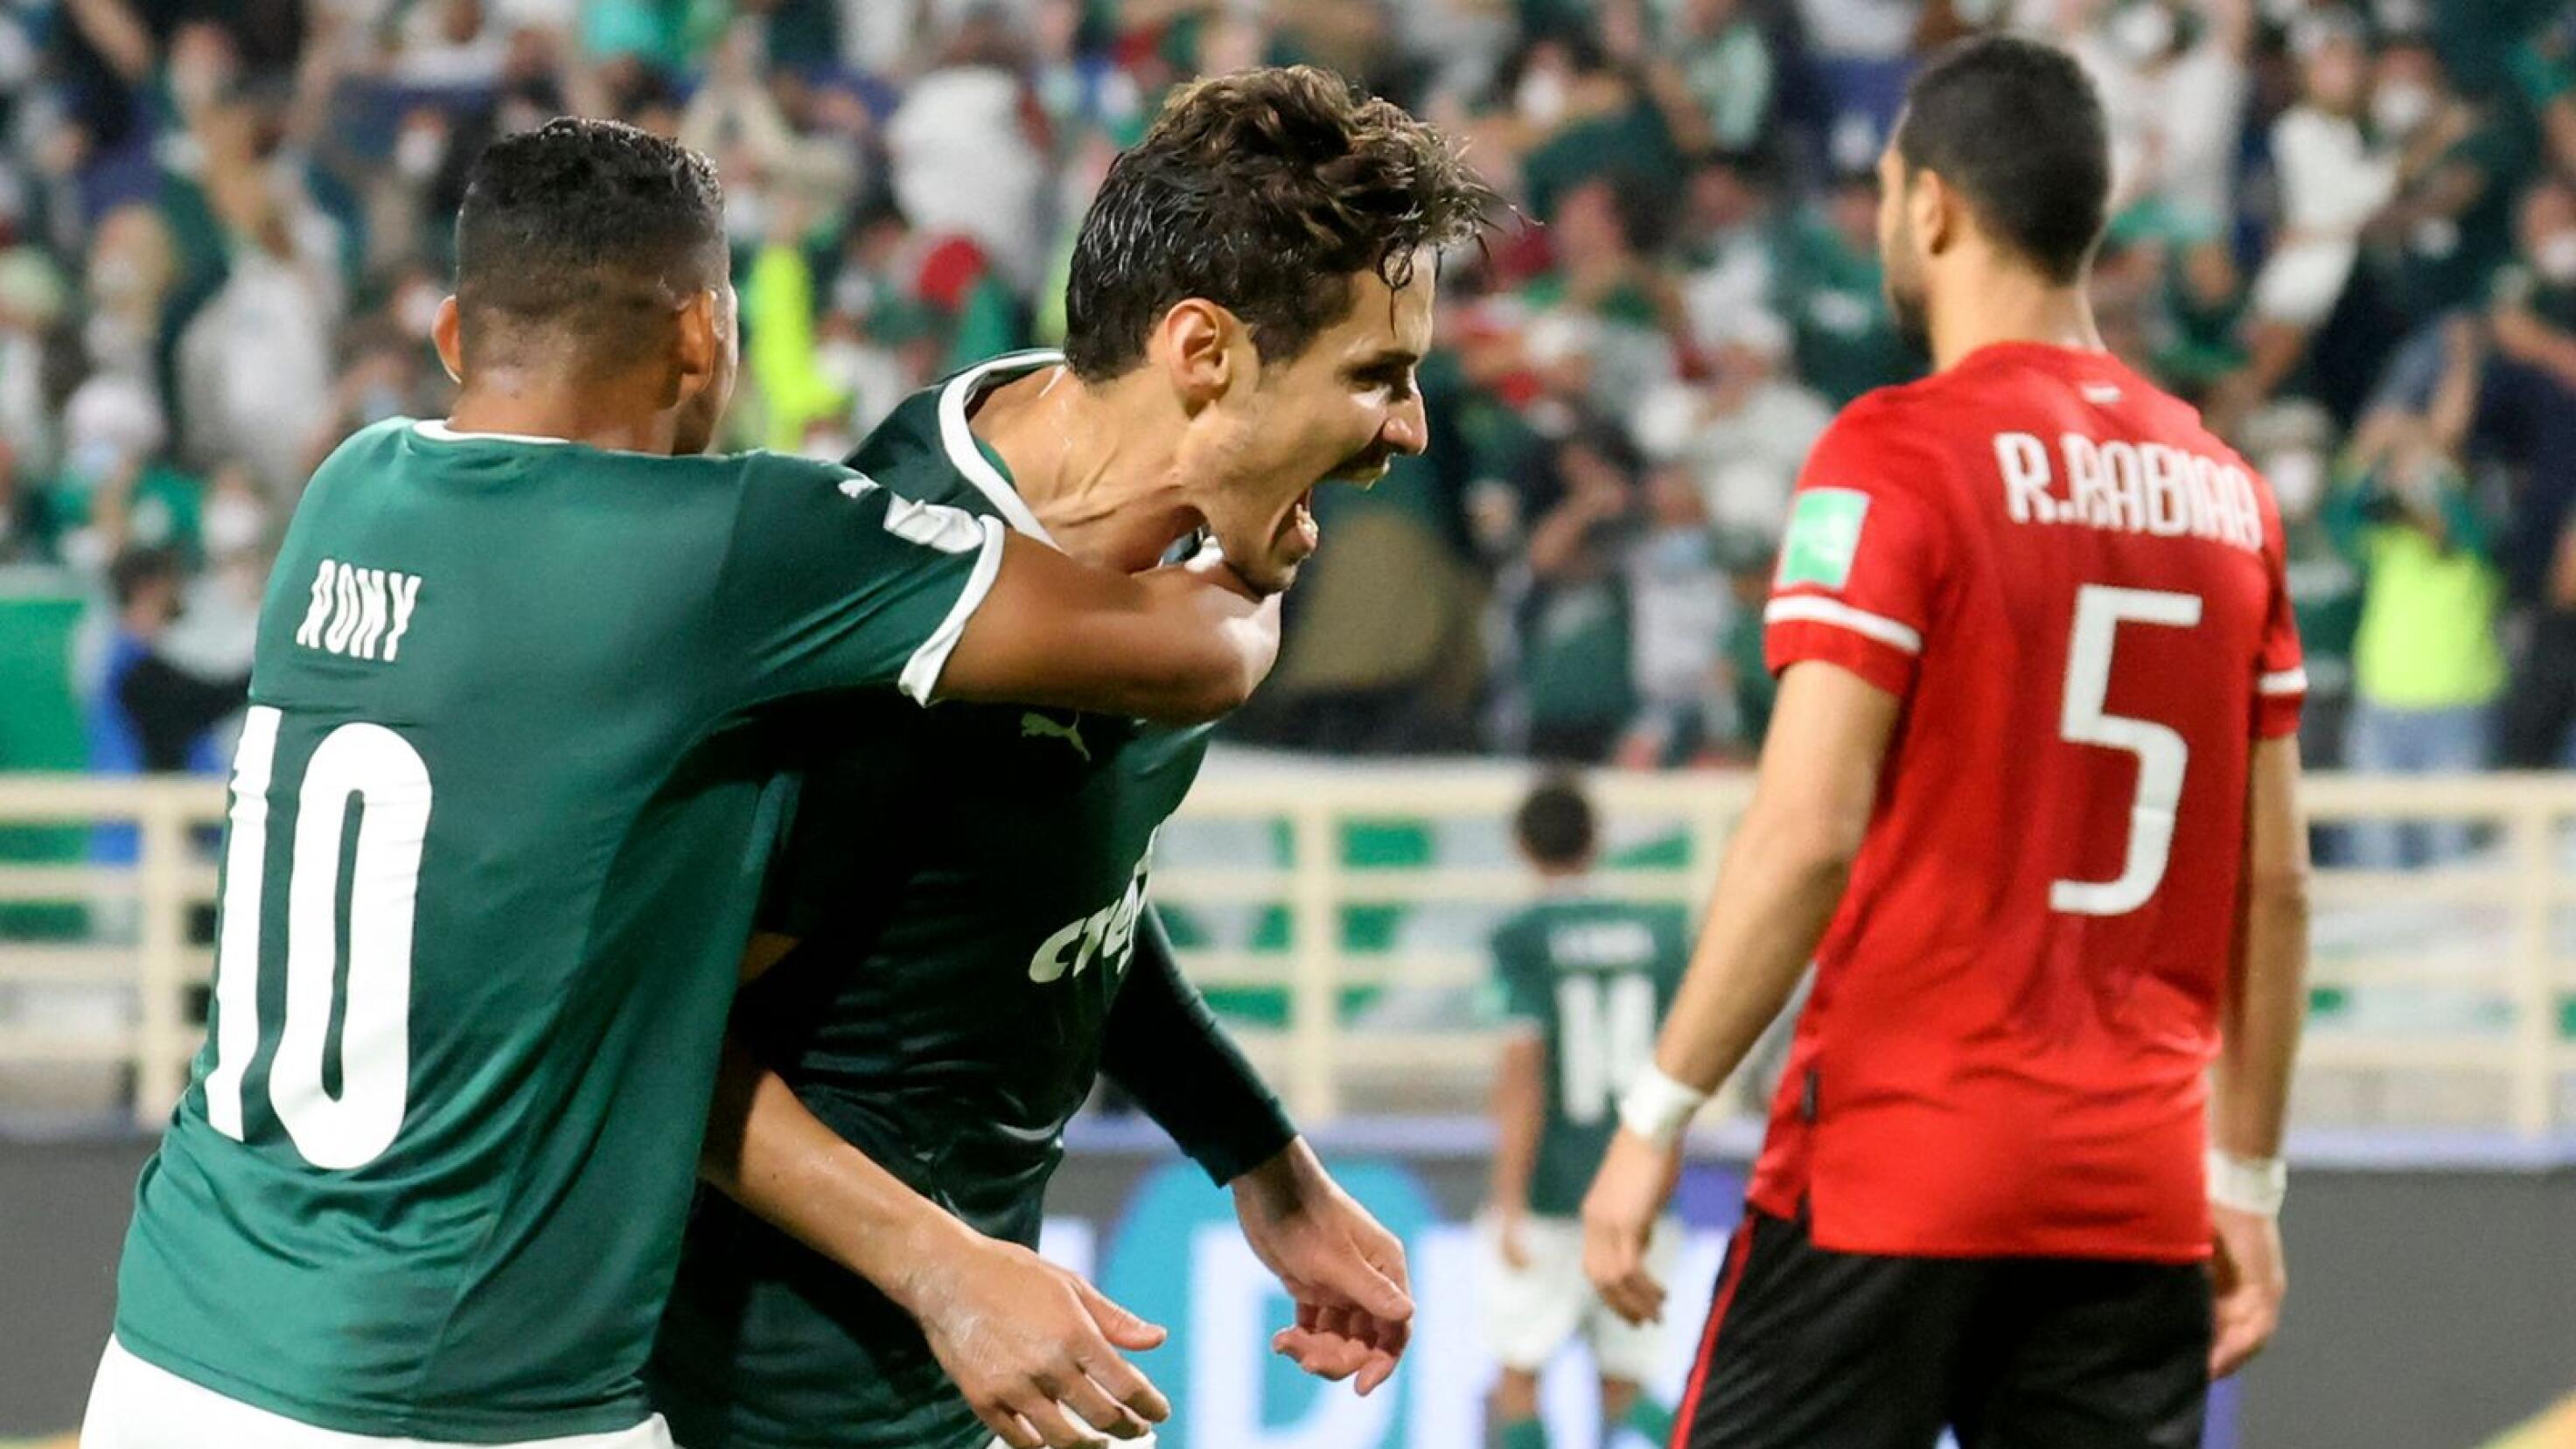 Palmeiras' forward Dudu celebrates after scoring their second goal during their Club World Cup clash against Egypt’s Al Ahly at al-Nahyan Stadium in Abu Dhabi on Tuesday